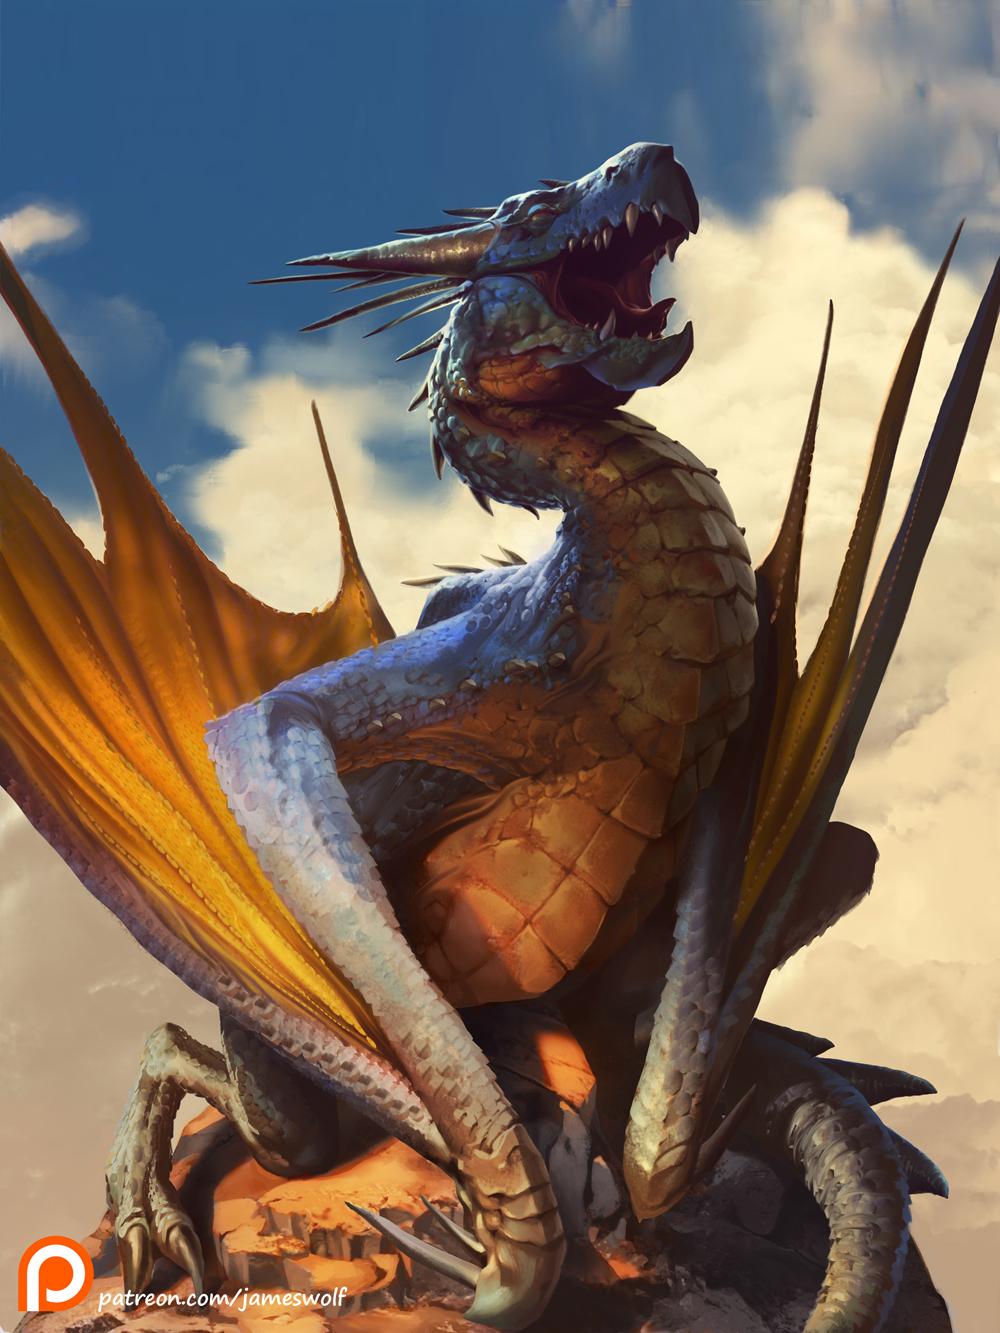 dragon sunbathing james wolf strehle fantasy epic 10 best